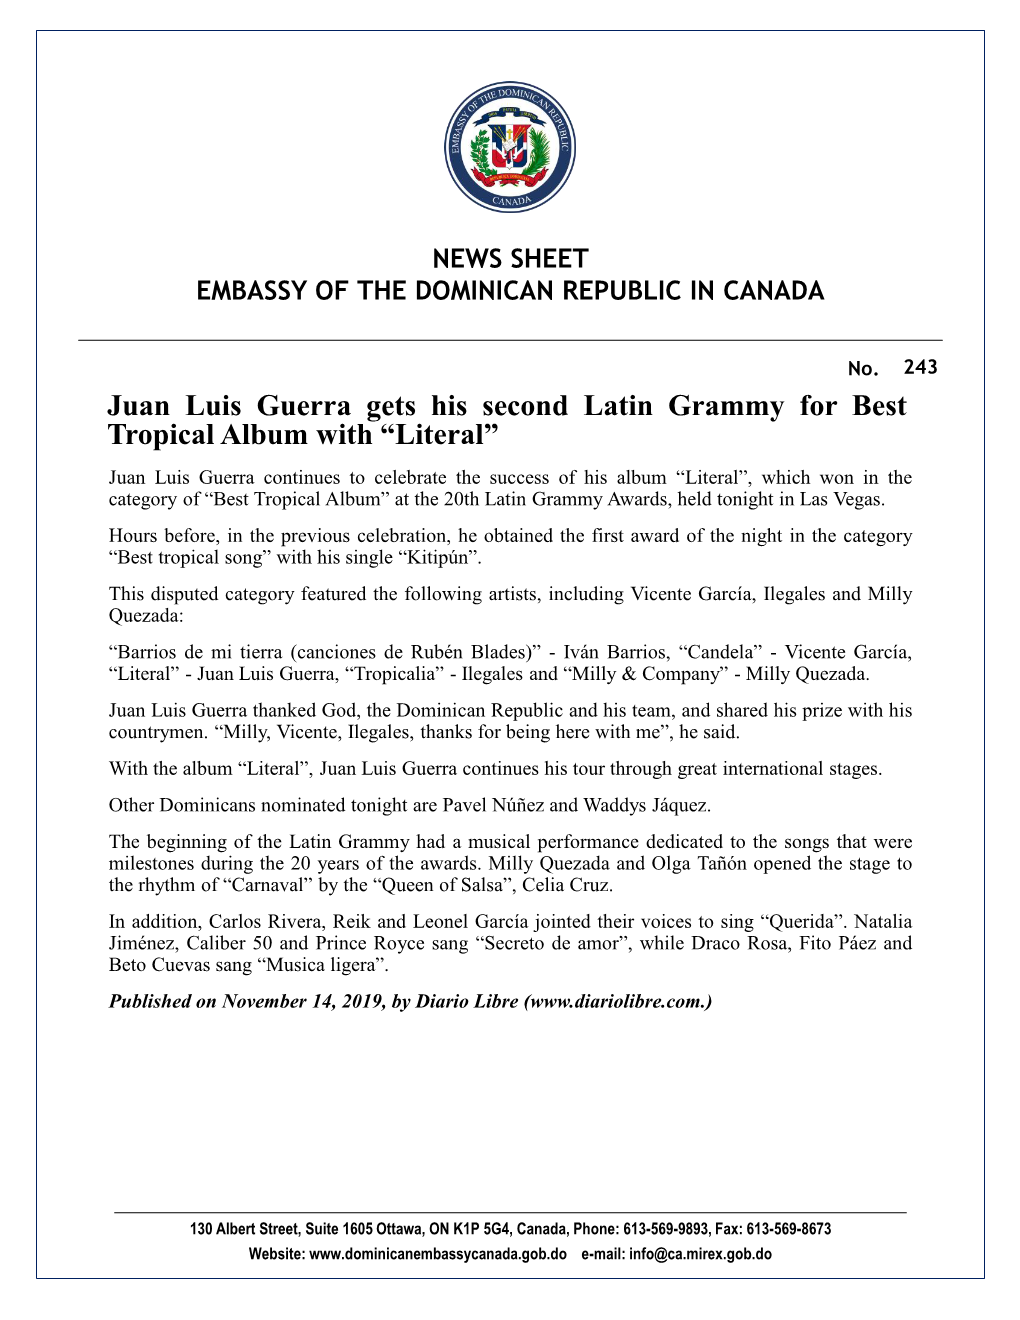 Juan Luis Guerra Gets His Second Latin Grammy for Best Tropical